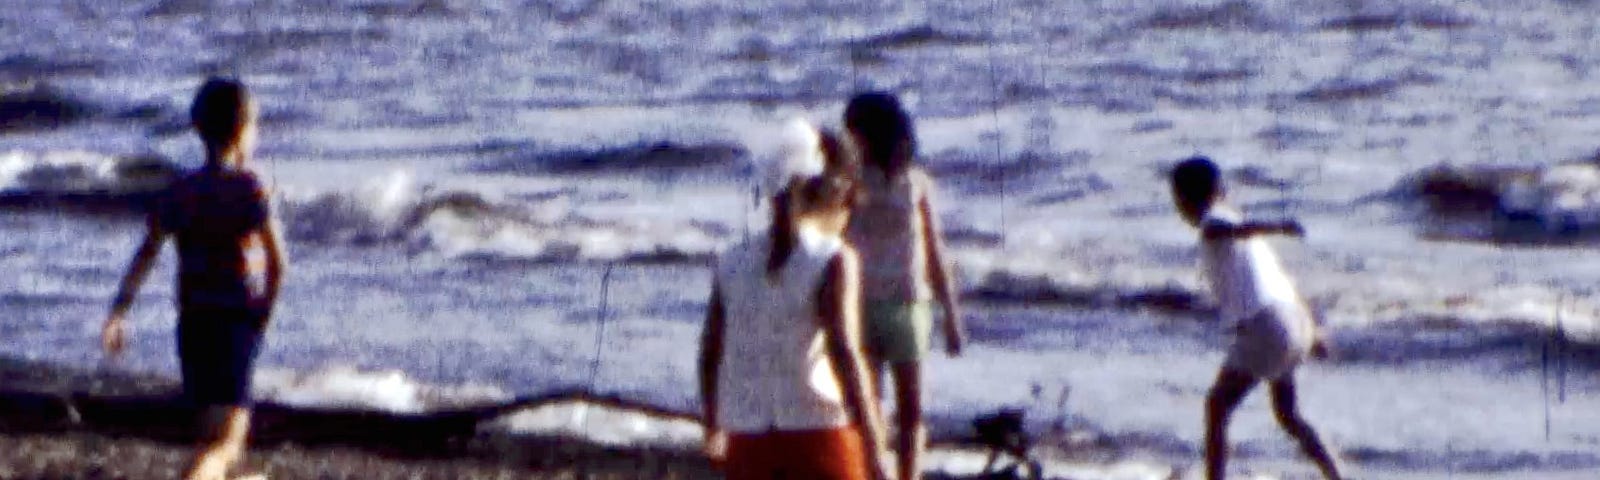 Woodlawn Beach, Lake Erie, 1968. Source: Matiz family archive, Super 8 film frame.